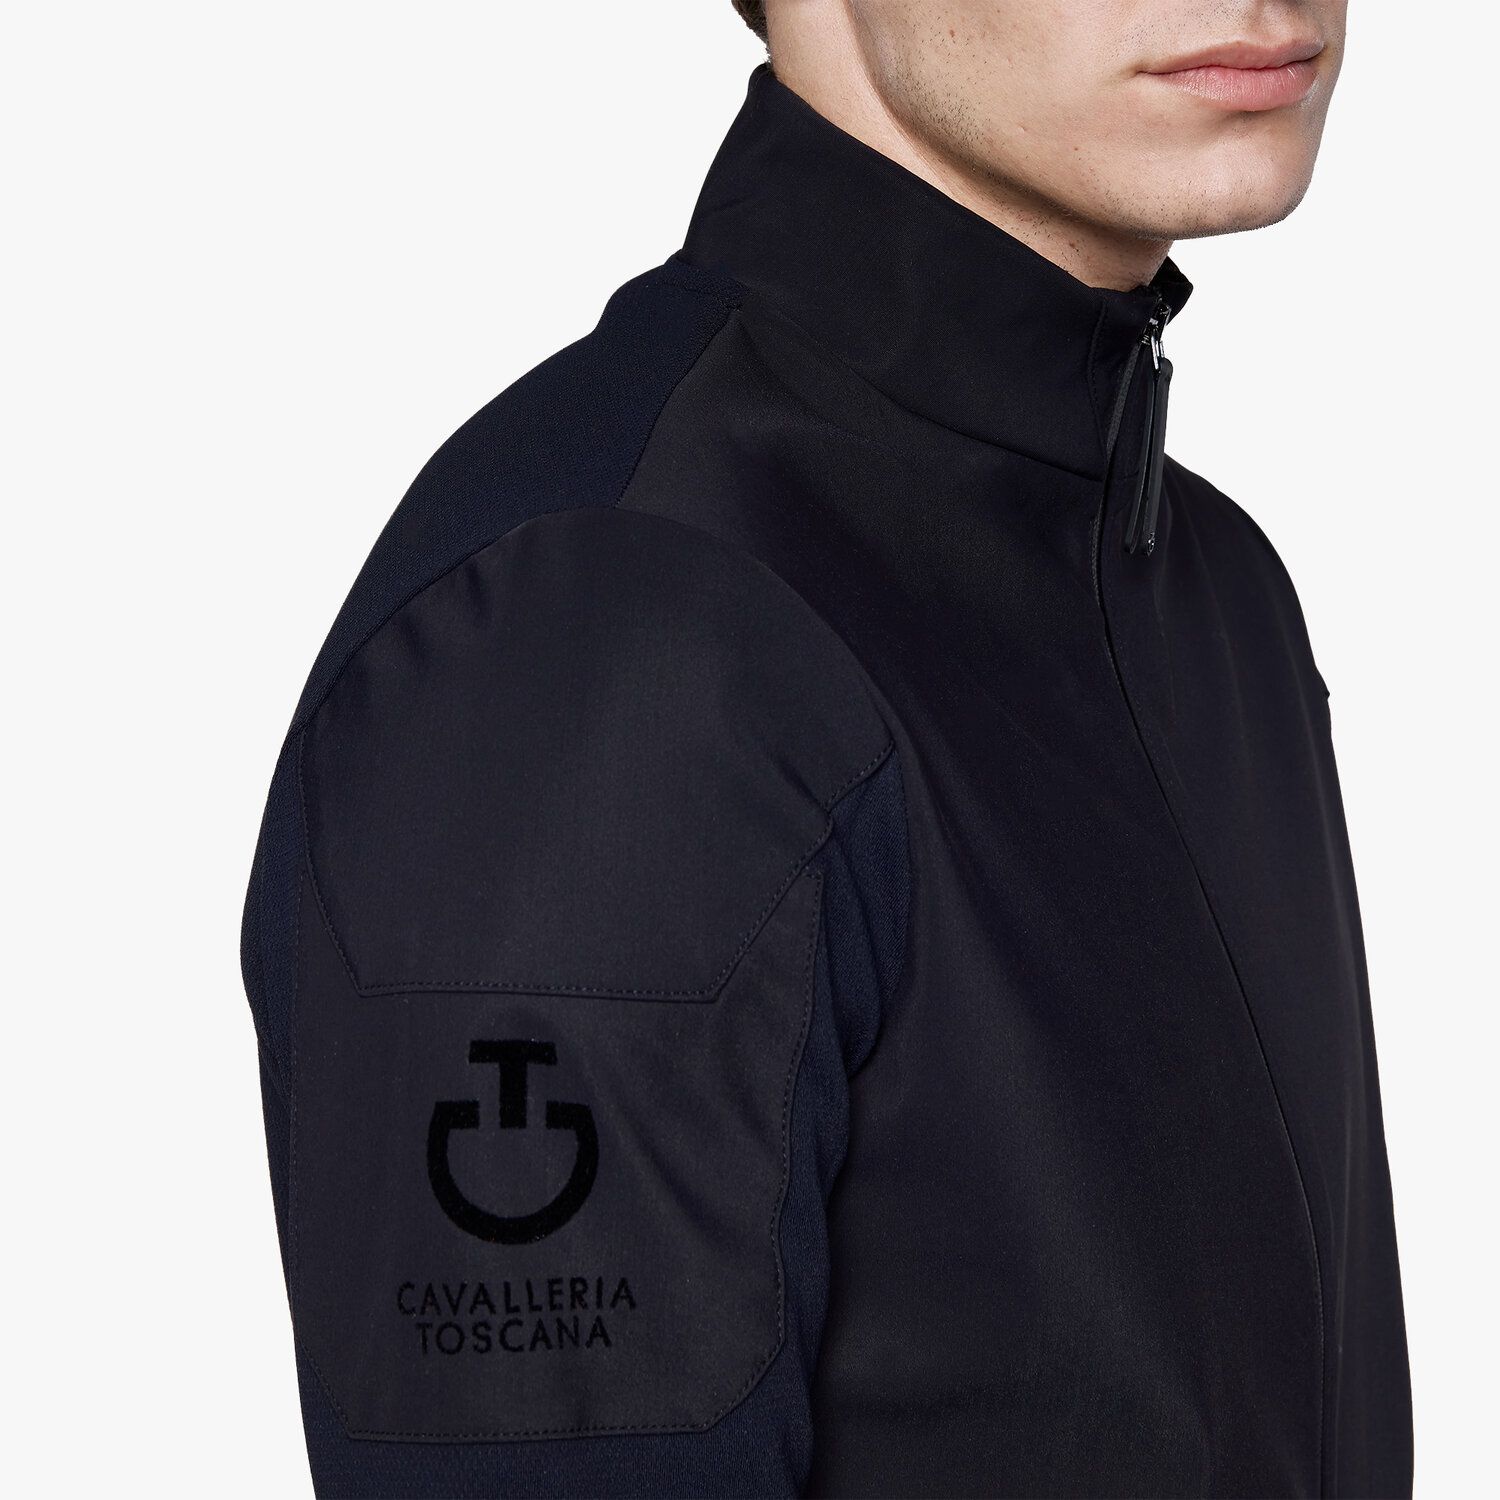 Cavalleria Toscana Men’s performance jersey jacket with a zip BLACK-3